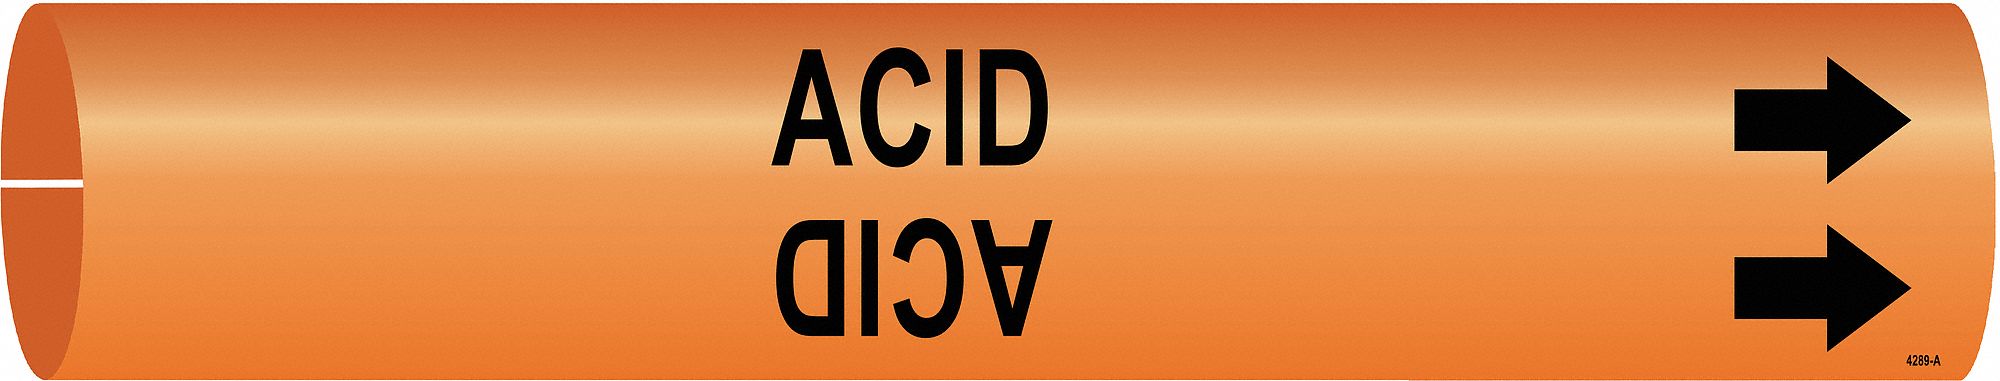 Snap-On Pipe Marker Legend Acid Legend Acid Brady 4289-A Black on Orange